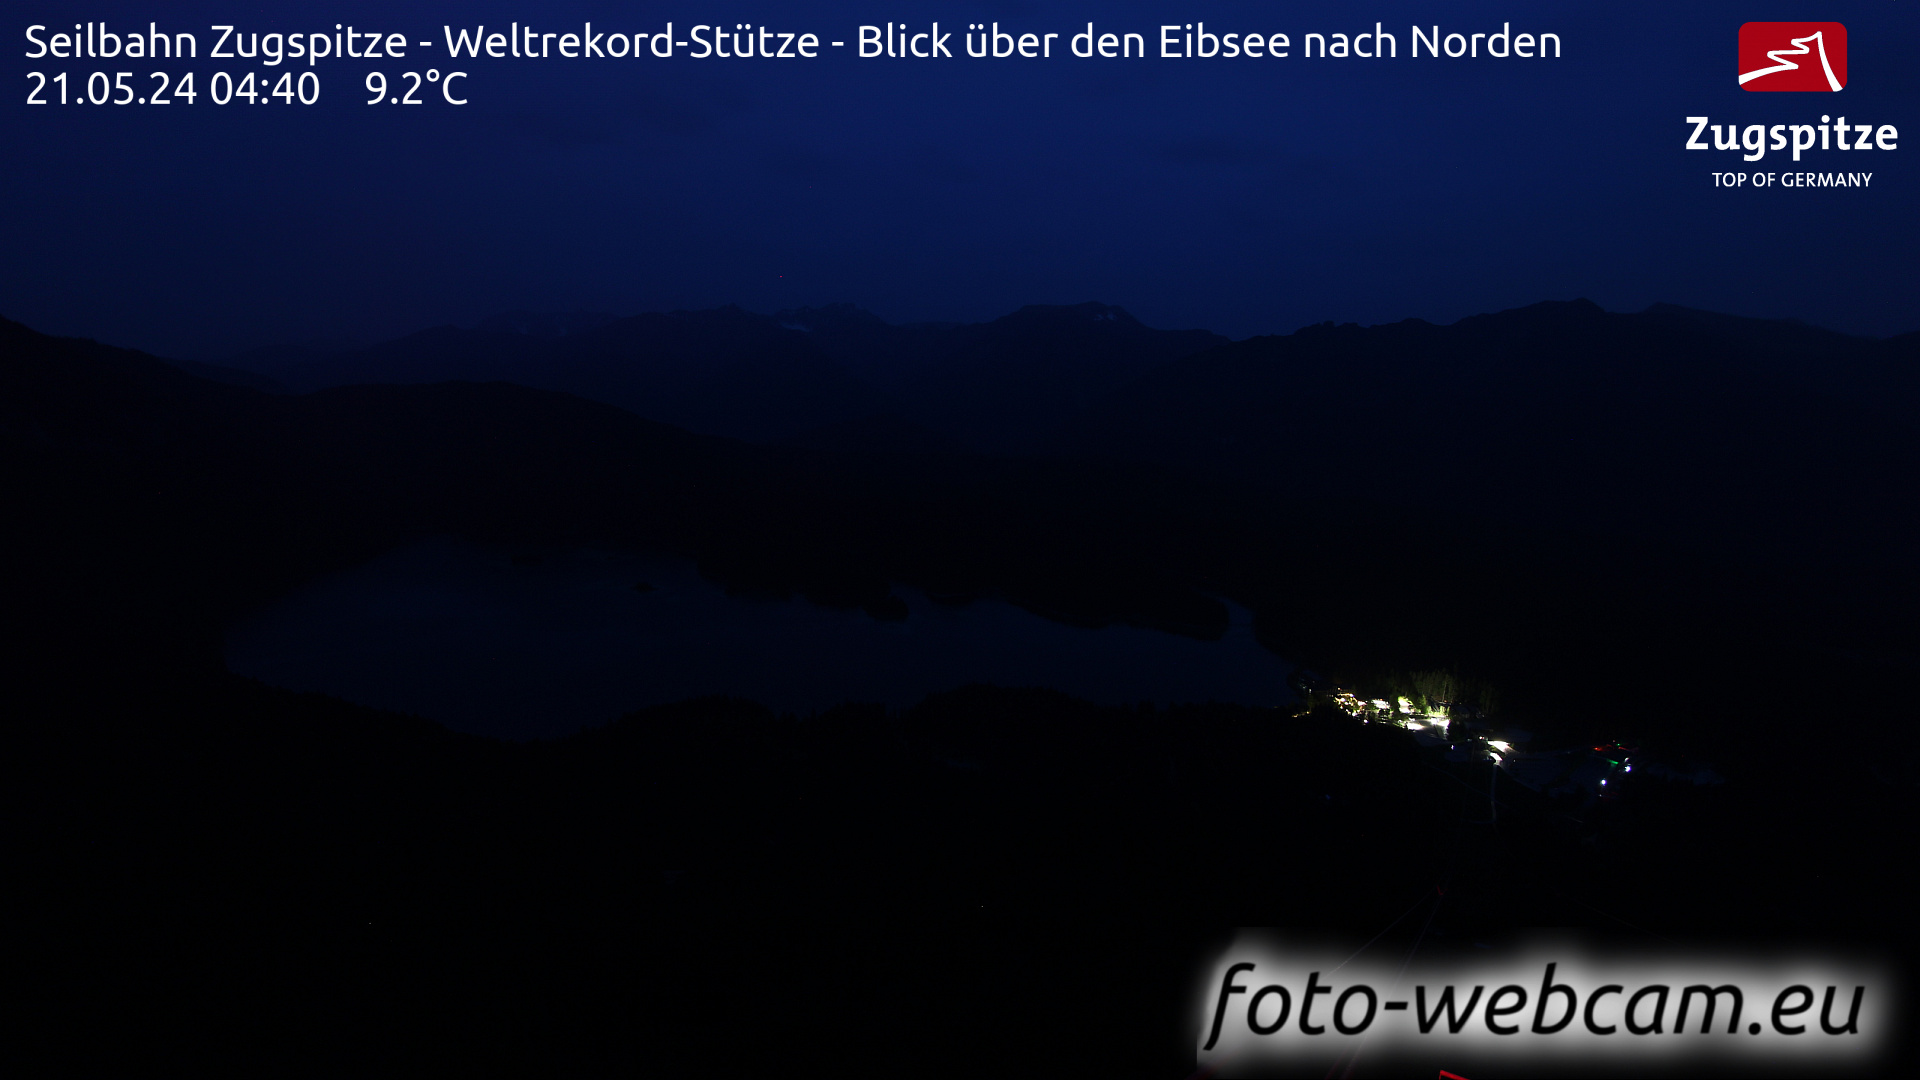 Zugspitze Thu. 04:49